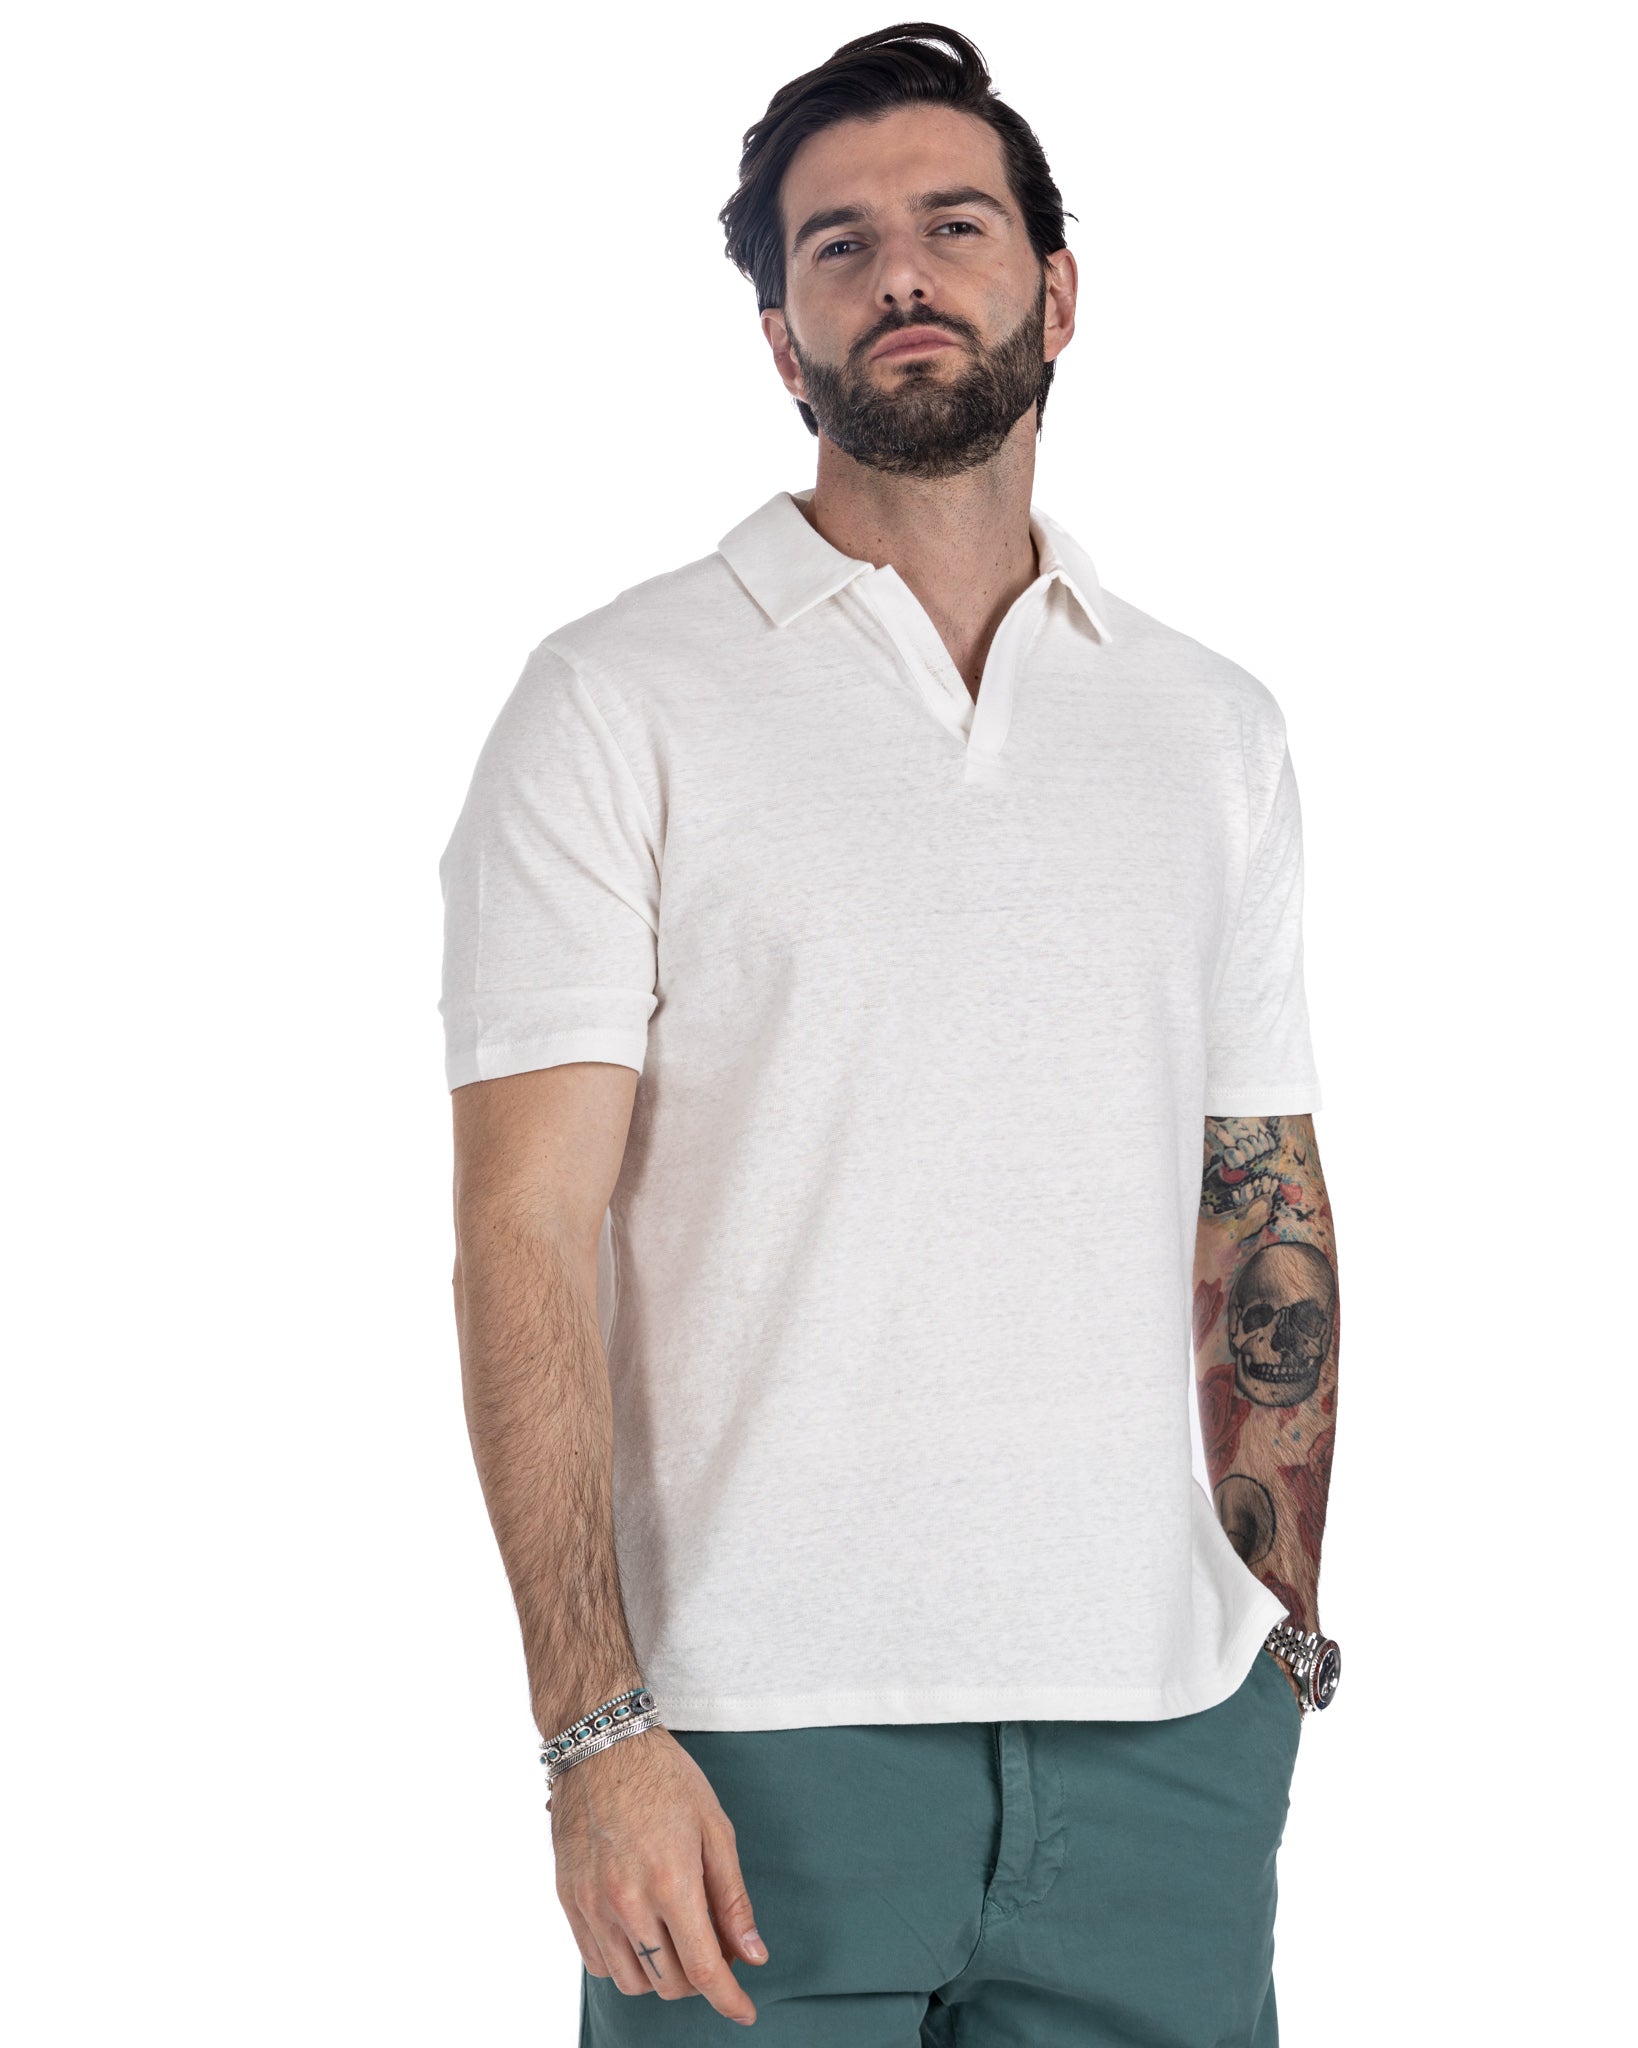 Panarea - white linen polo shirt